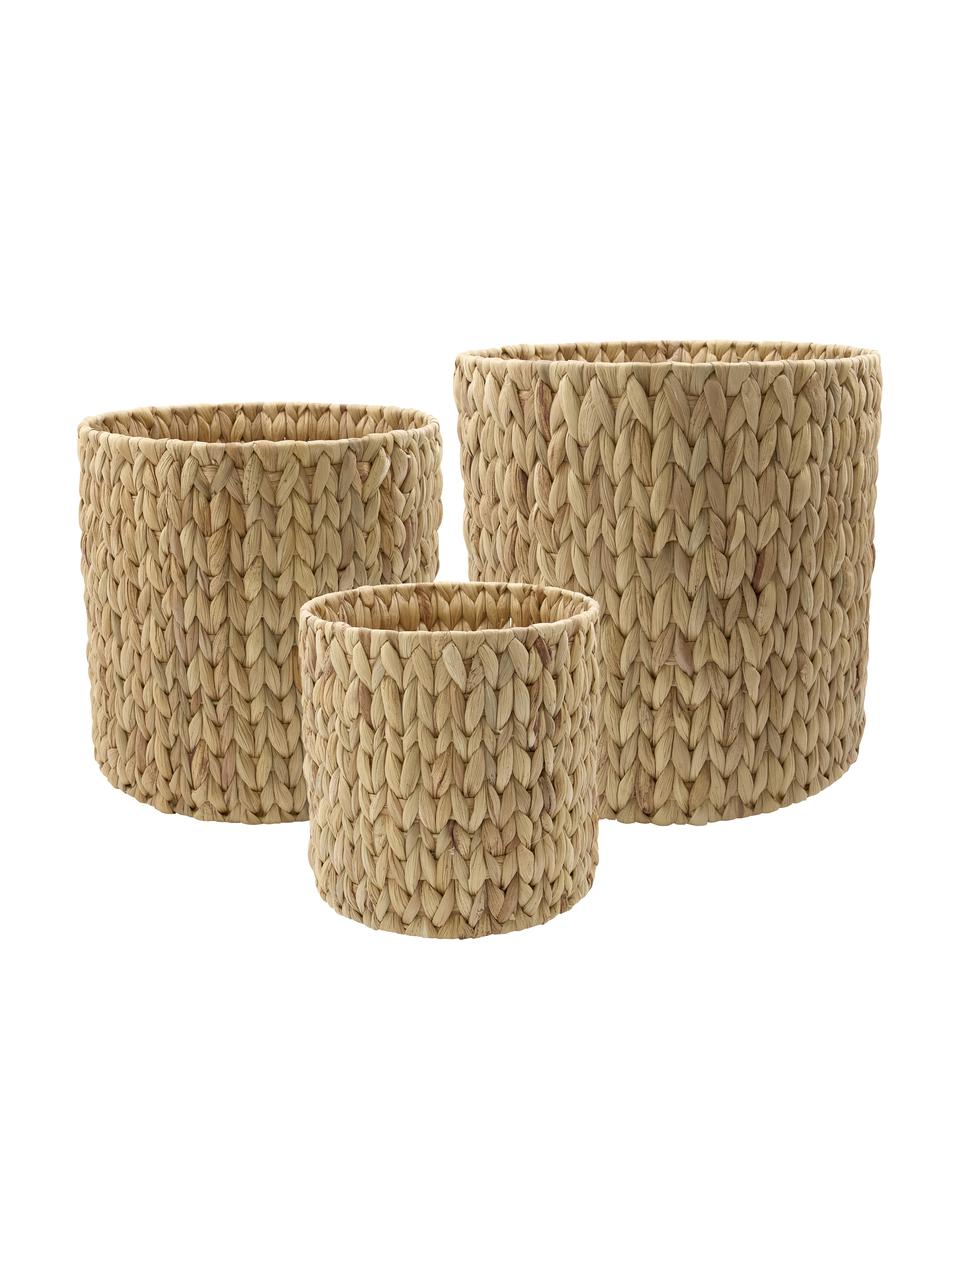 Set de cestas Roun, 3 uds., Cesta: jacinto de agua, Estructura: alambre de acero, Marrón, Set de diferentes tamaños